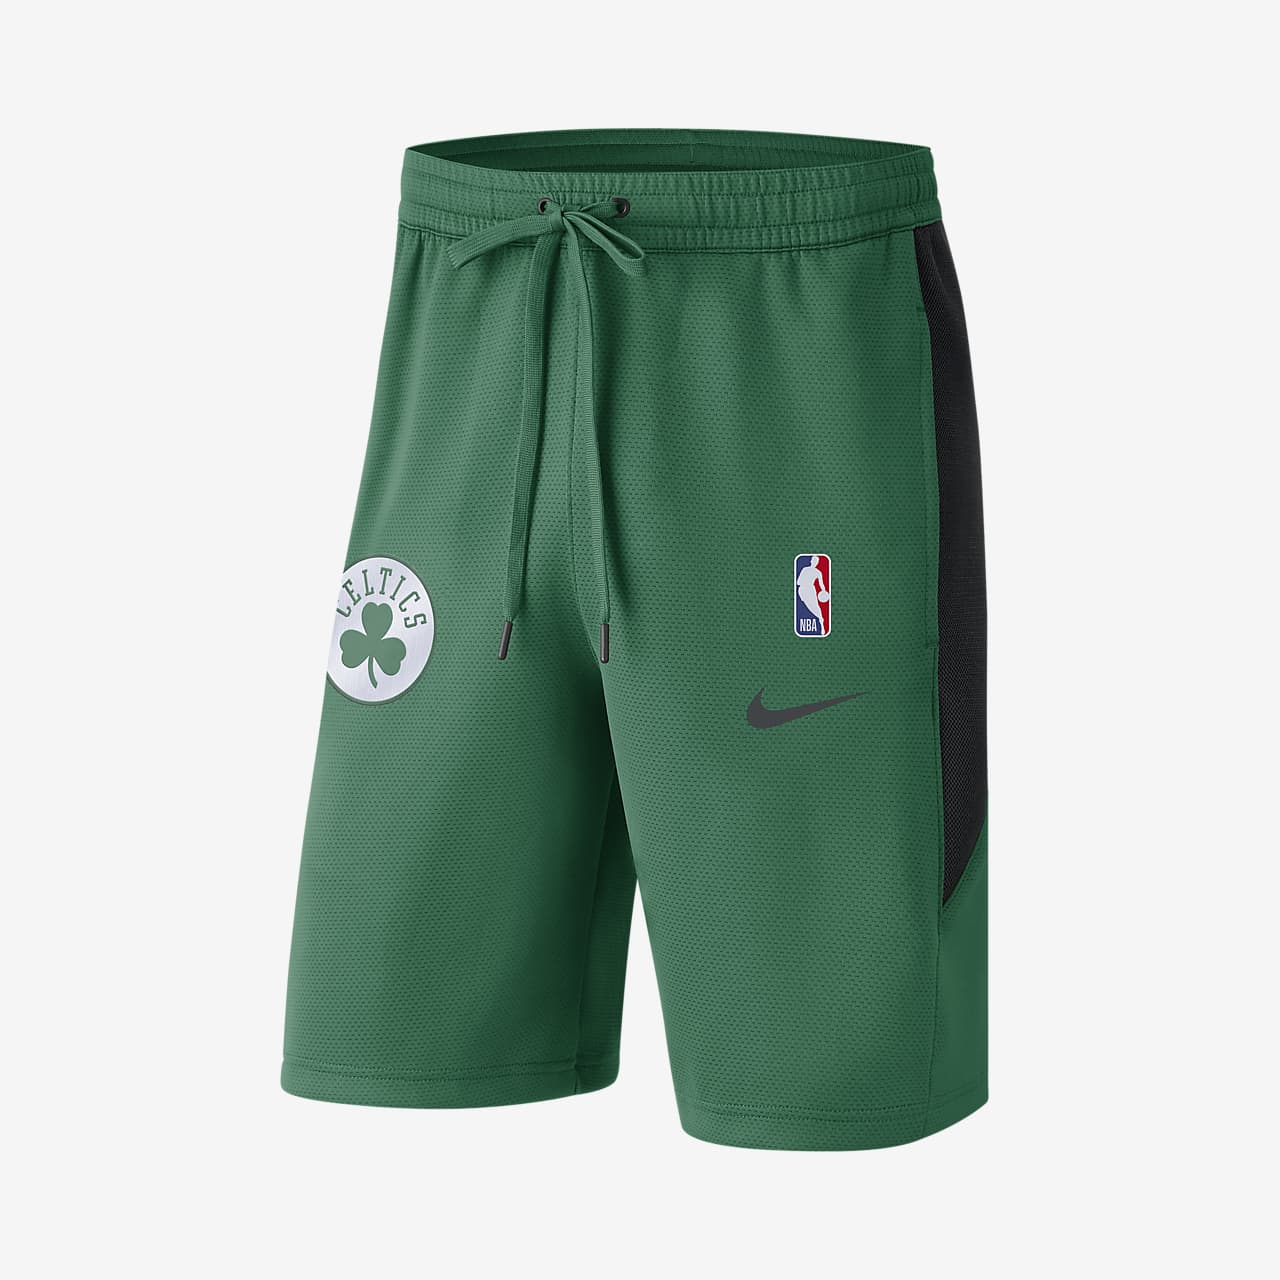 boston celtics home shorts